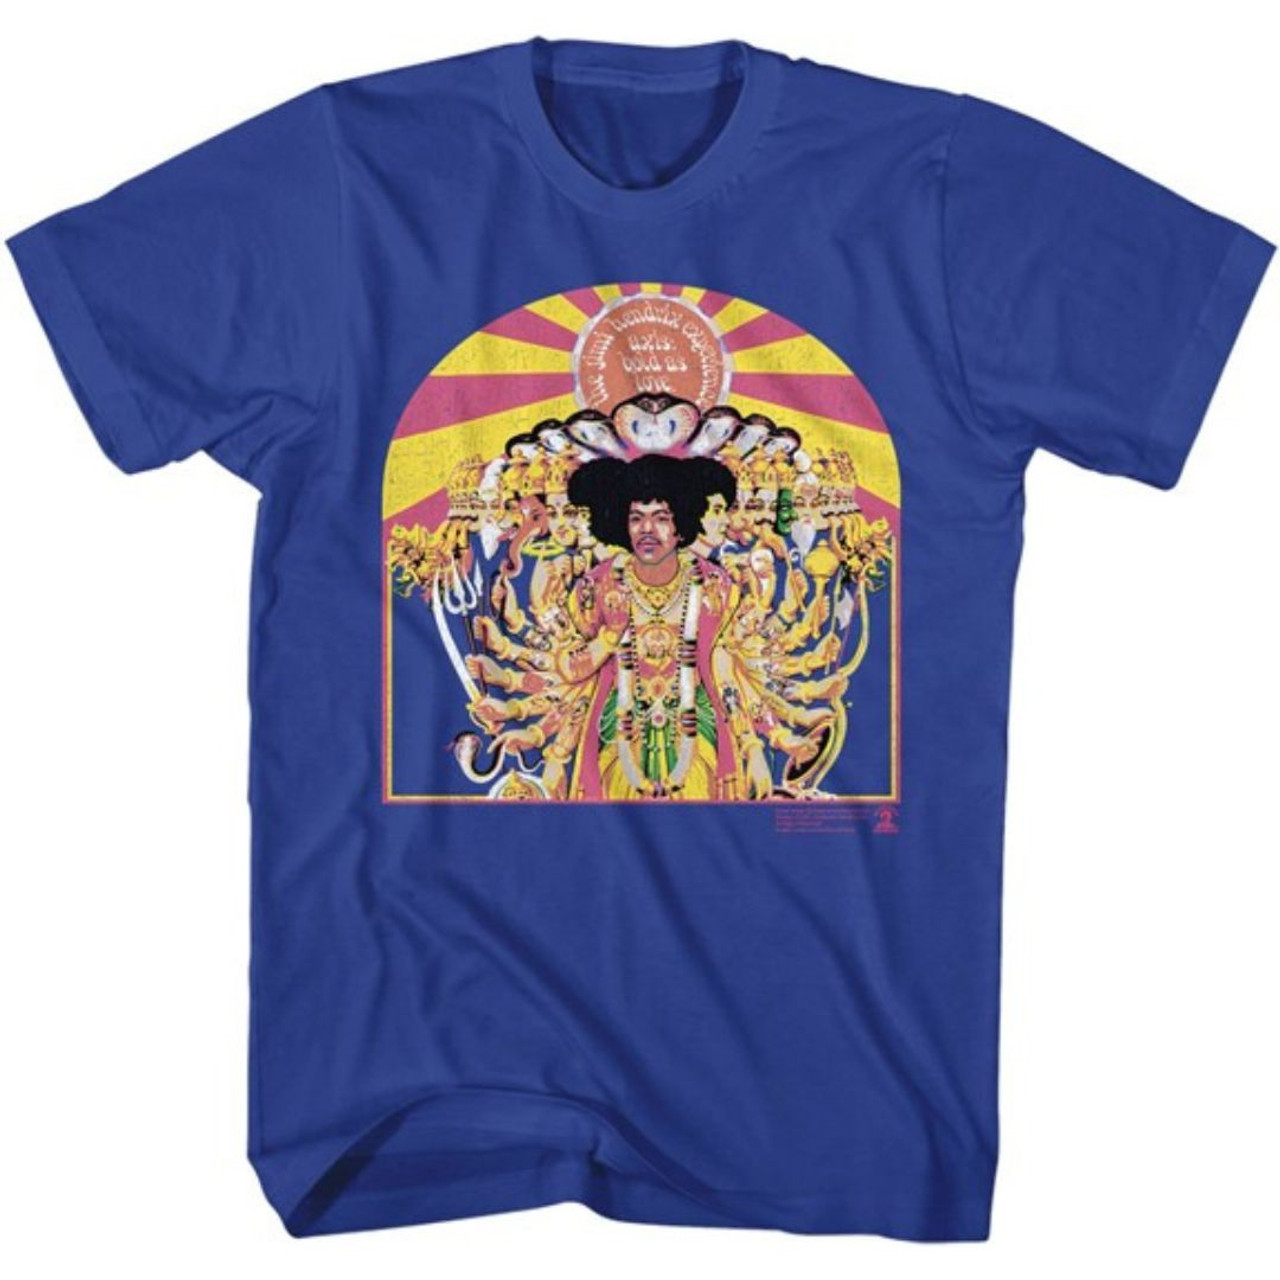 Jimi Hendrix Axis Bold as Love Album Cover Men's T-shirt